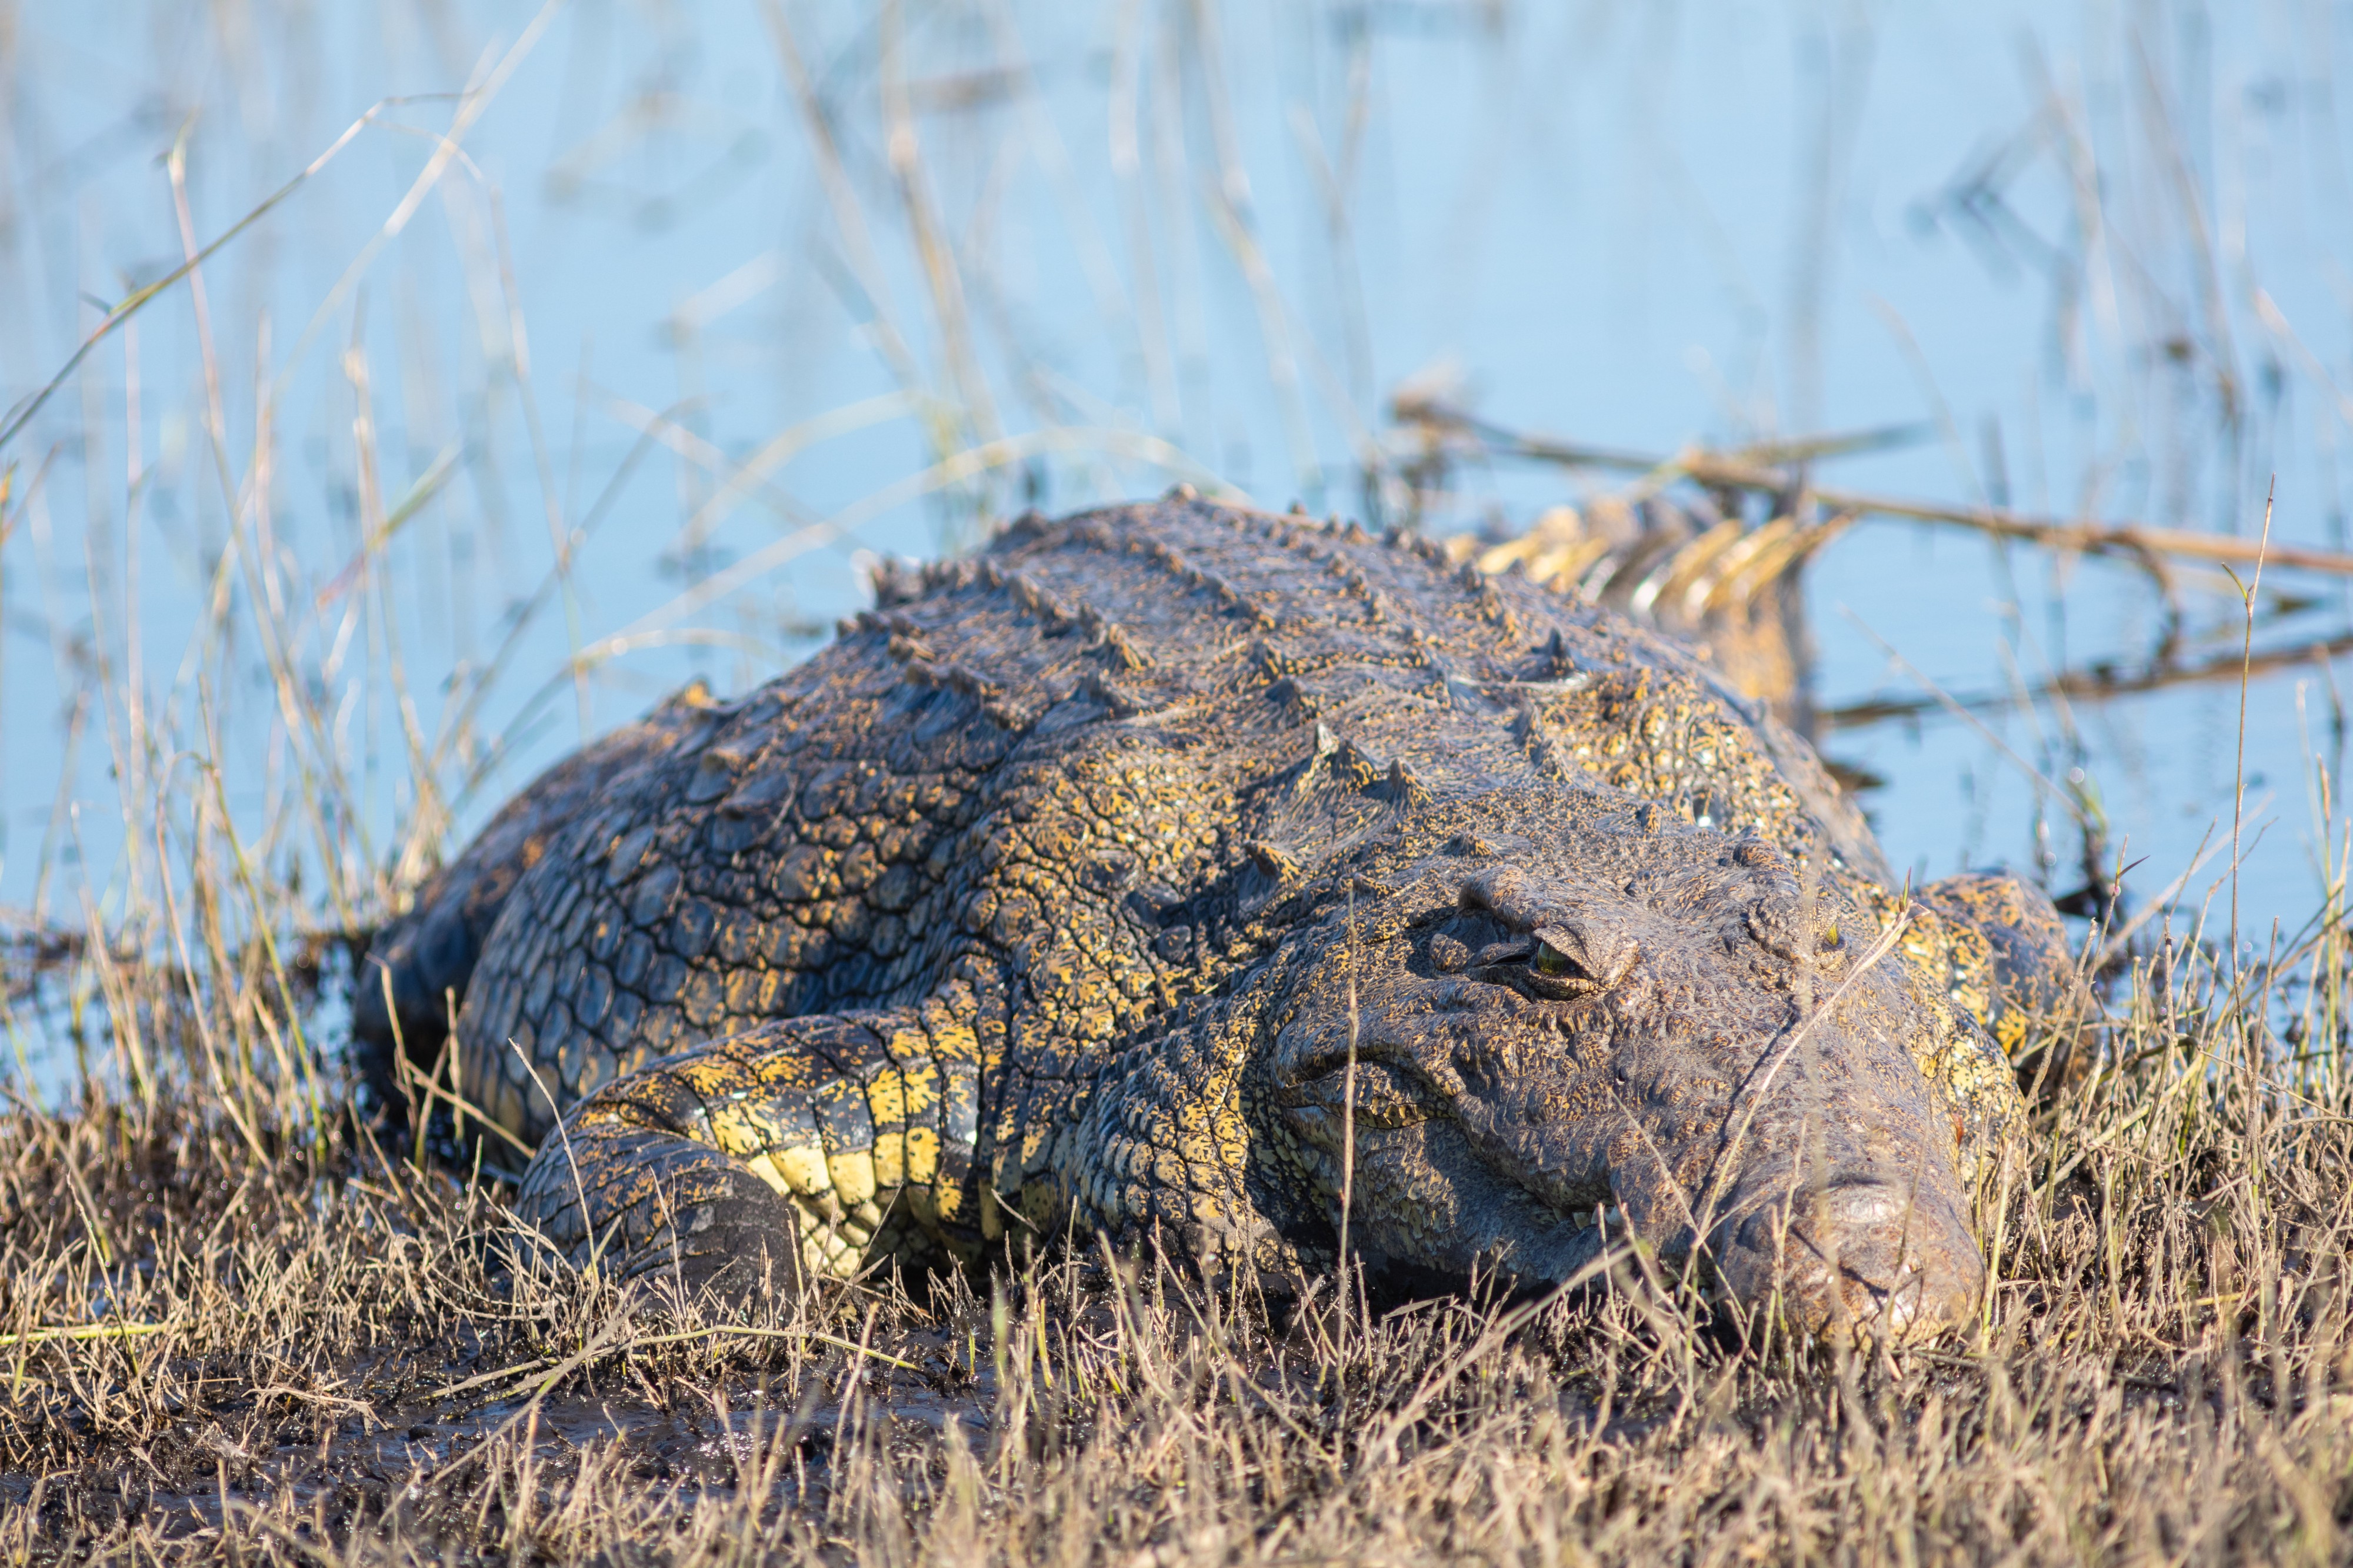 Cocodrilo del Nilo (Crocodylus niloticus), parque nacional de Chobe, Botsuana, 2018-07-28, DD 52